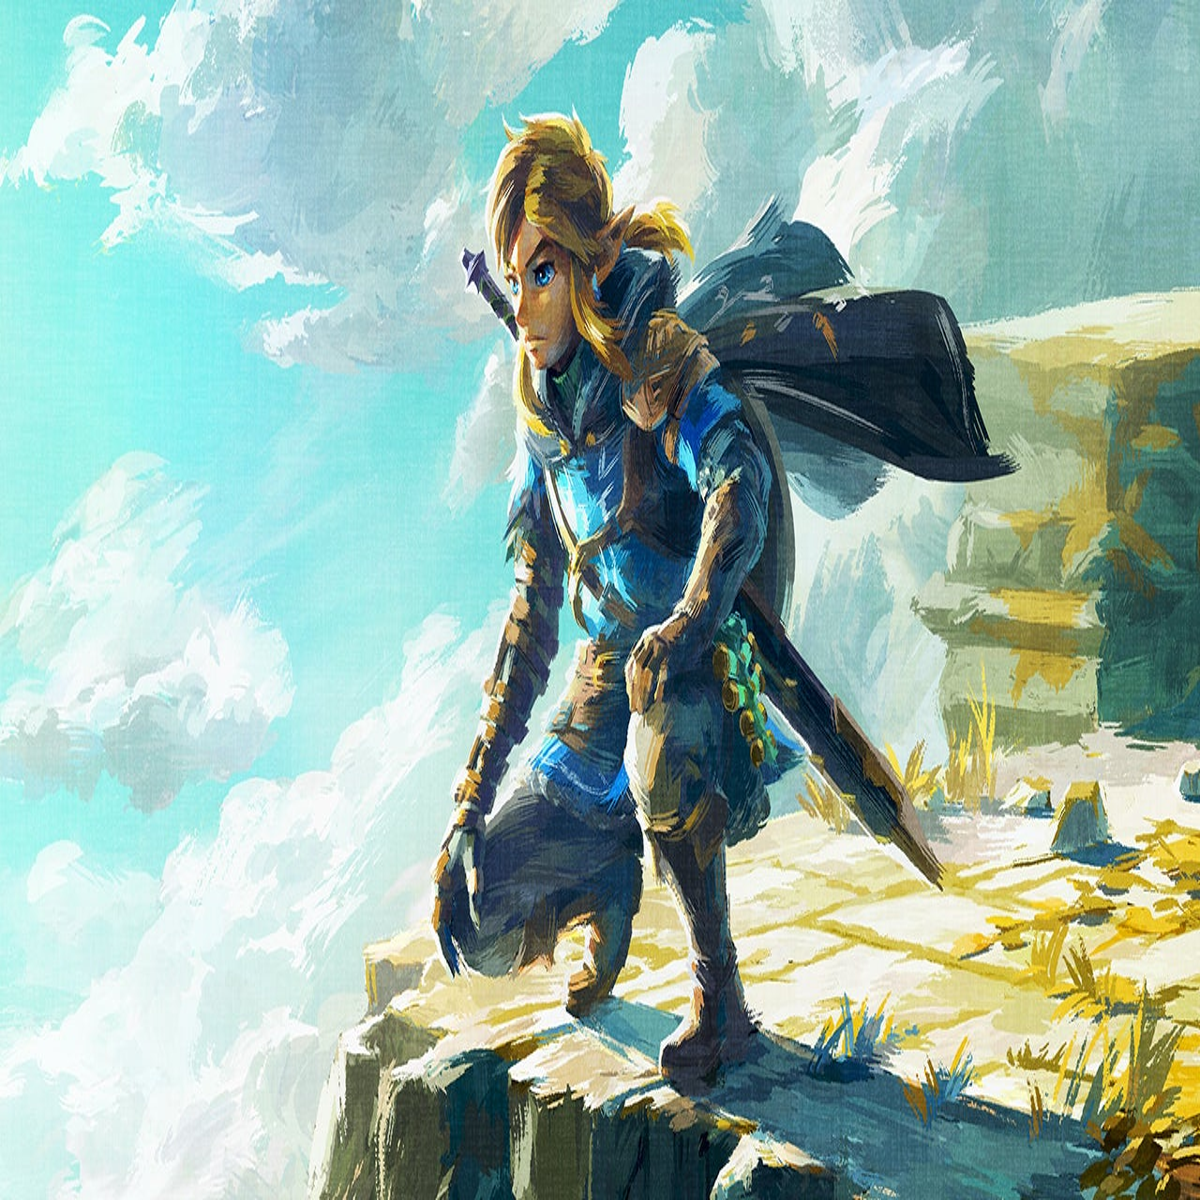 The Legend of Zelda™: Tears of the Kingdom